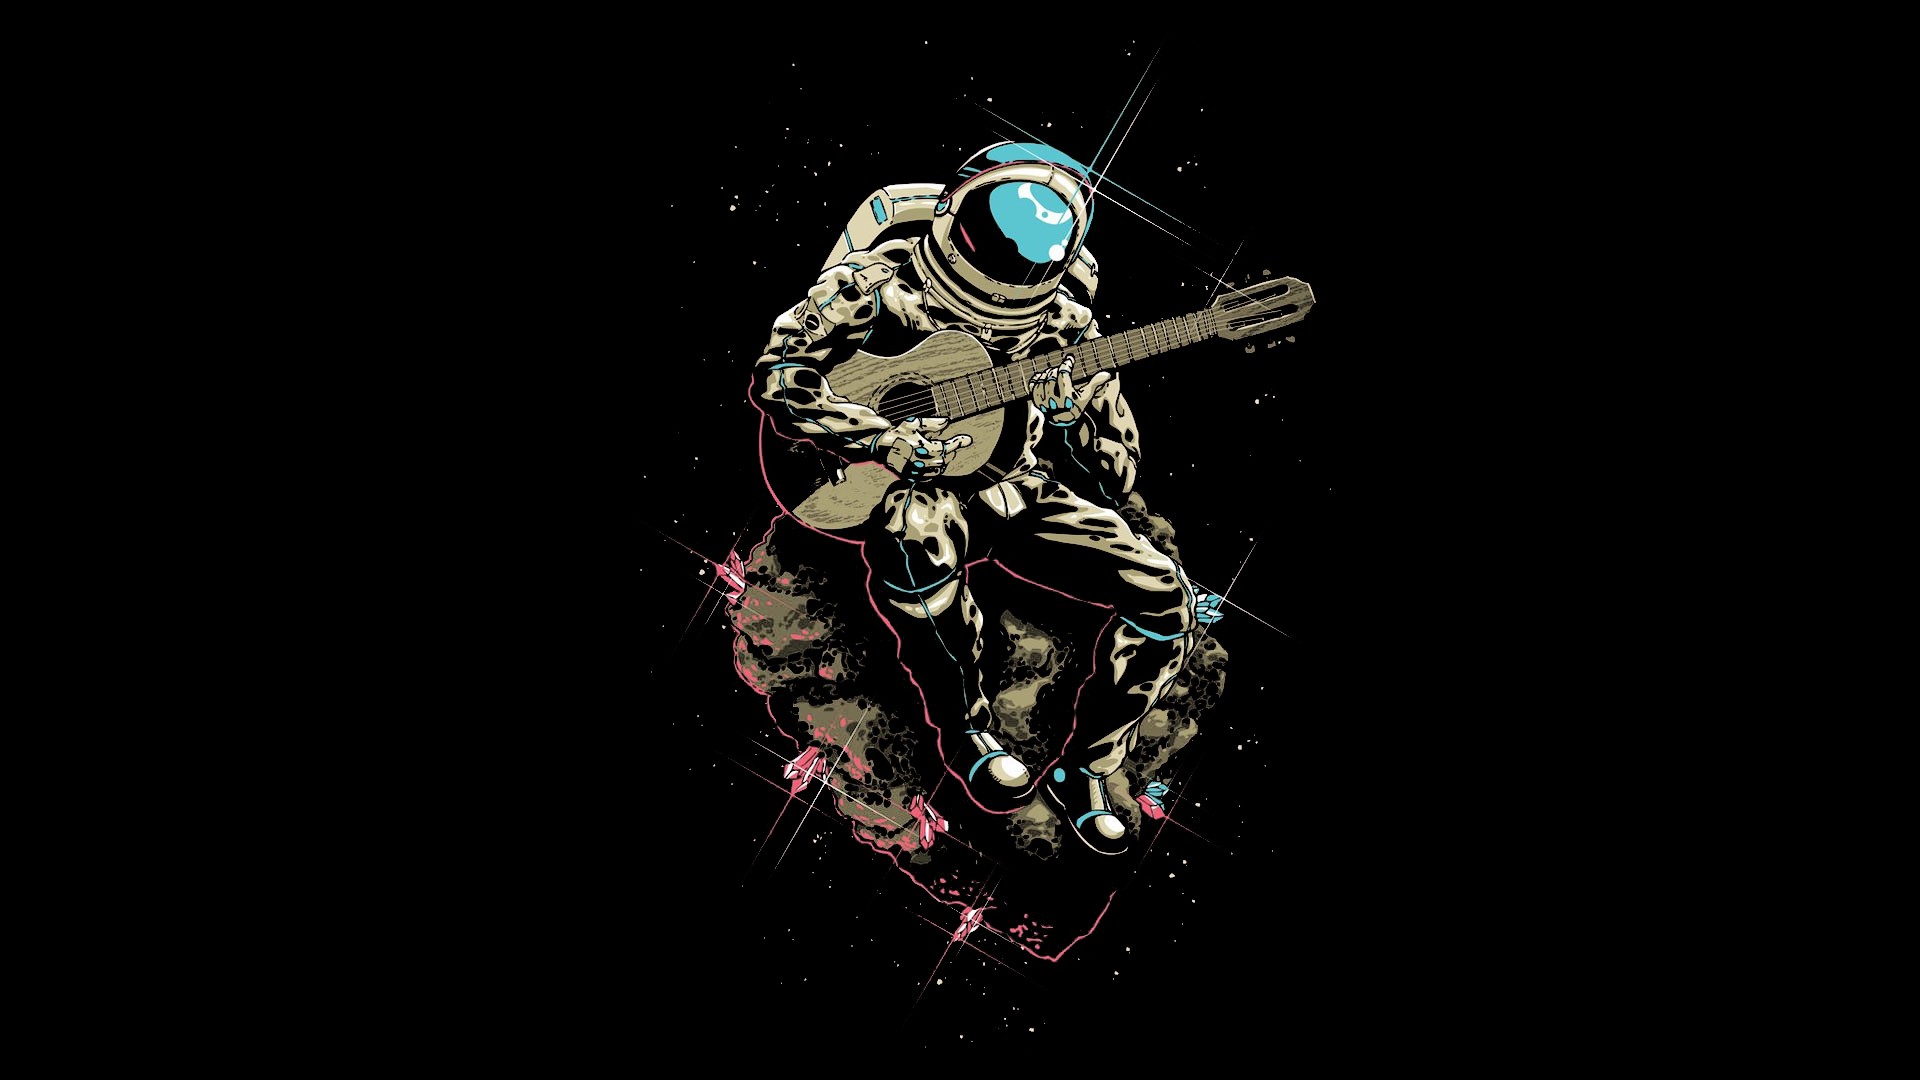 Space Astronaut Guitar Musician Asteroid Digital Art Spacesuit Men Helmet Space Suit Playing Music M 1920x1080